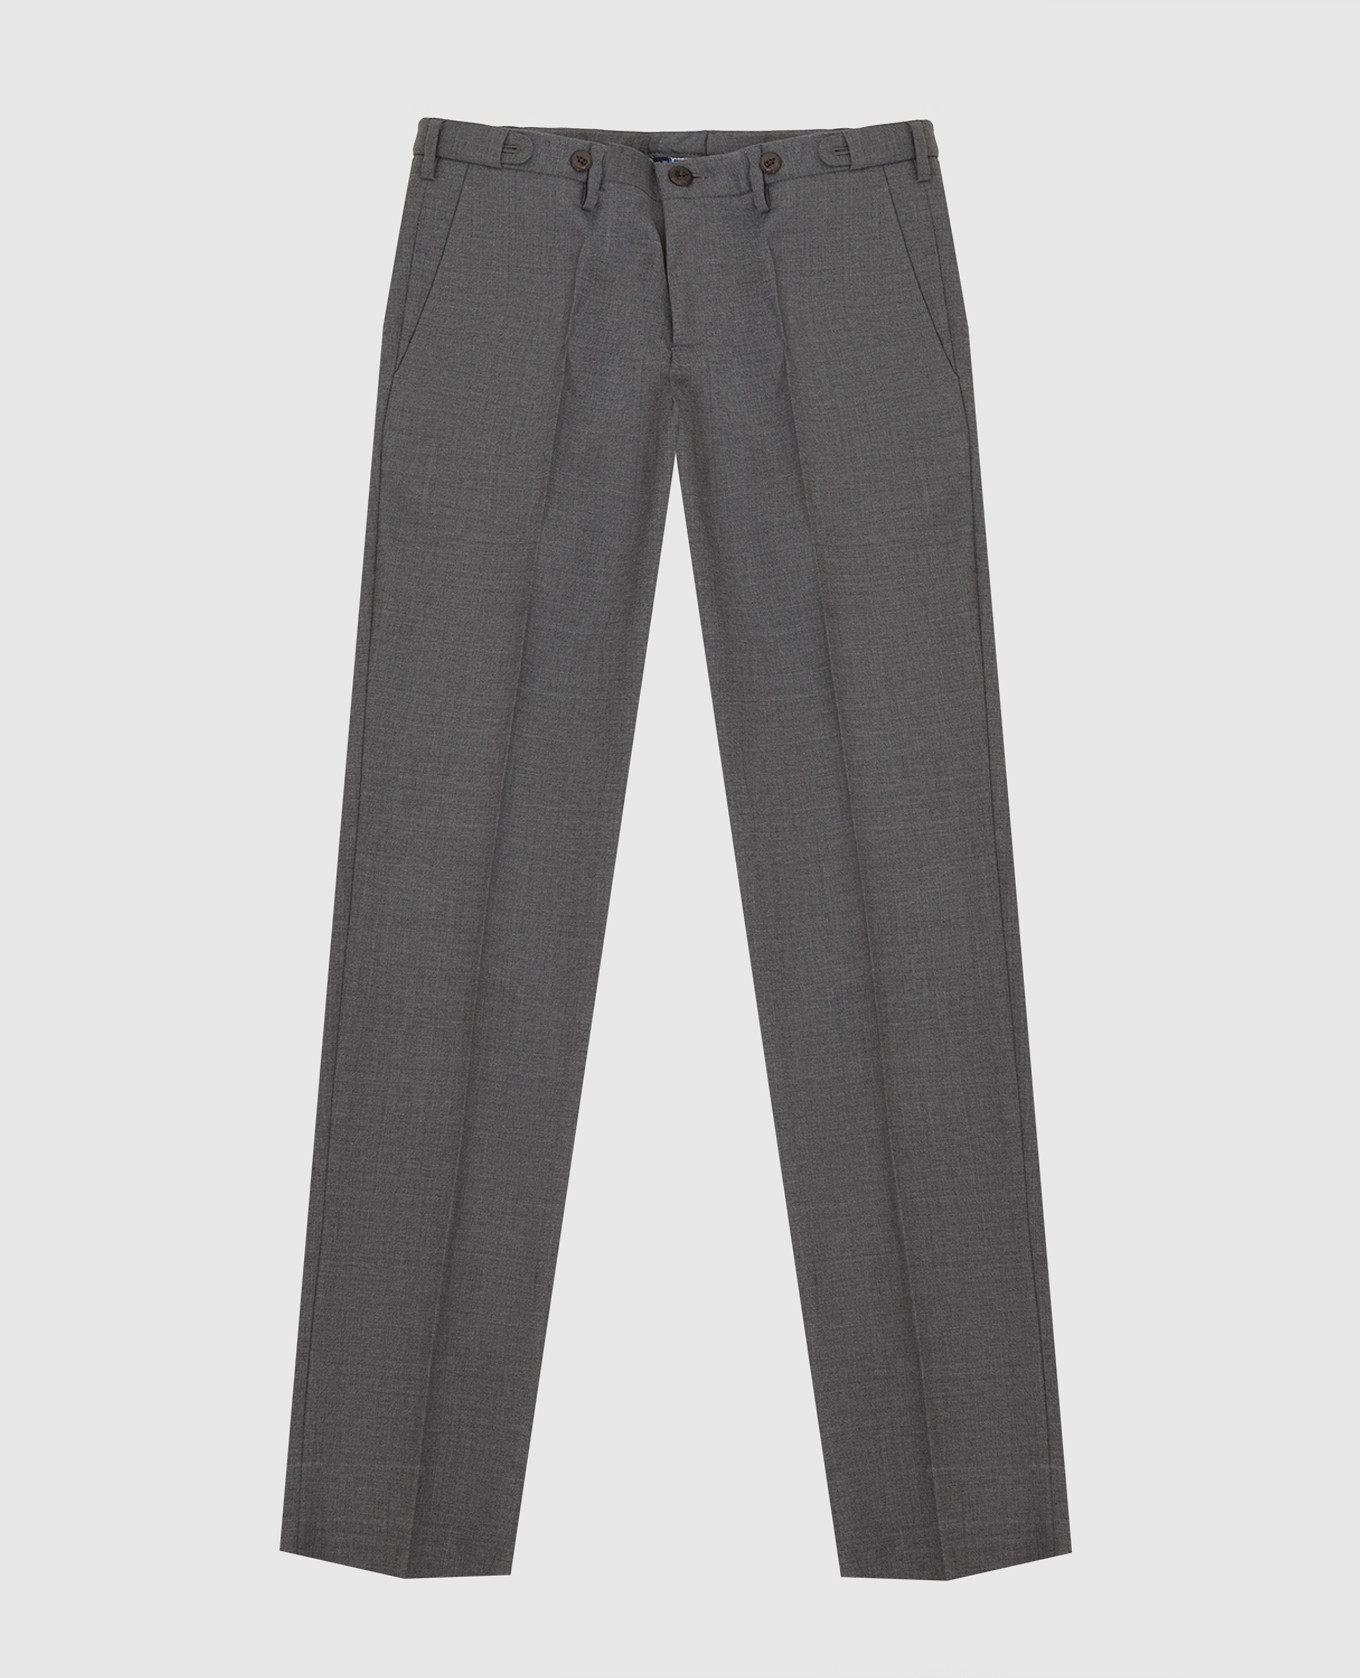 Children's gray wool trousers